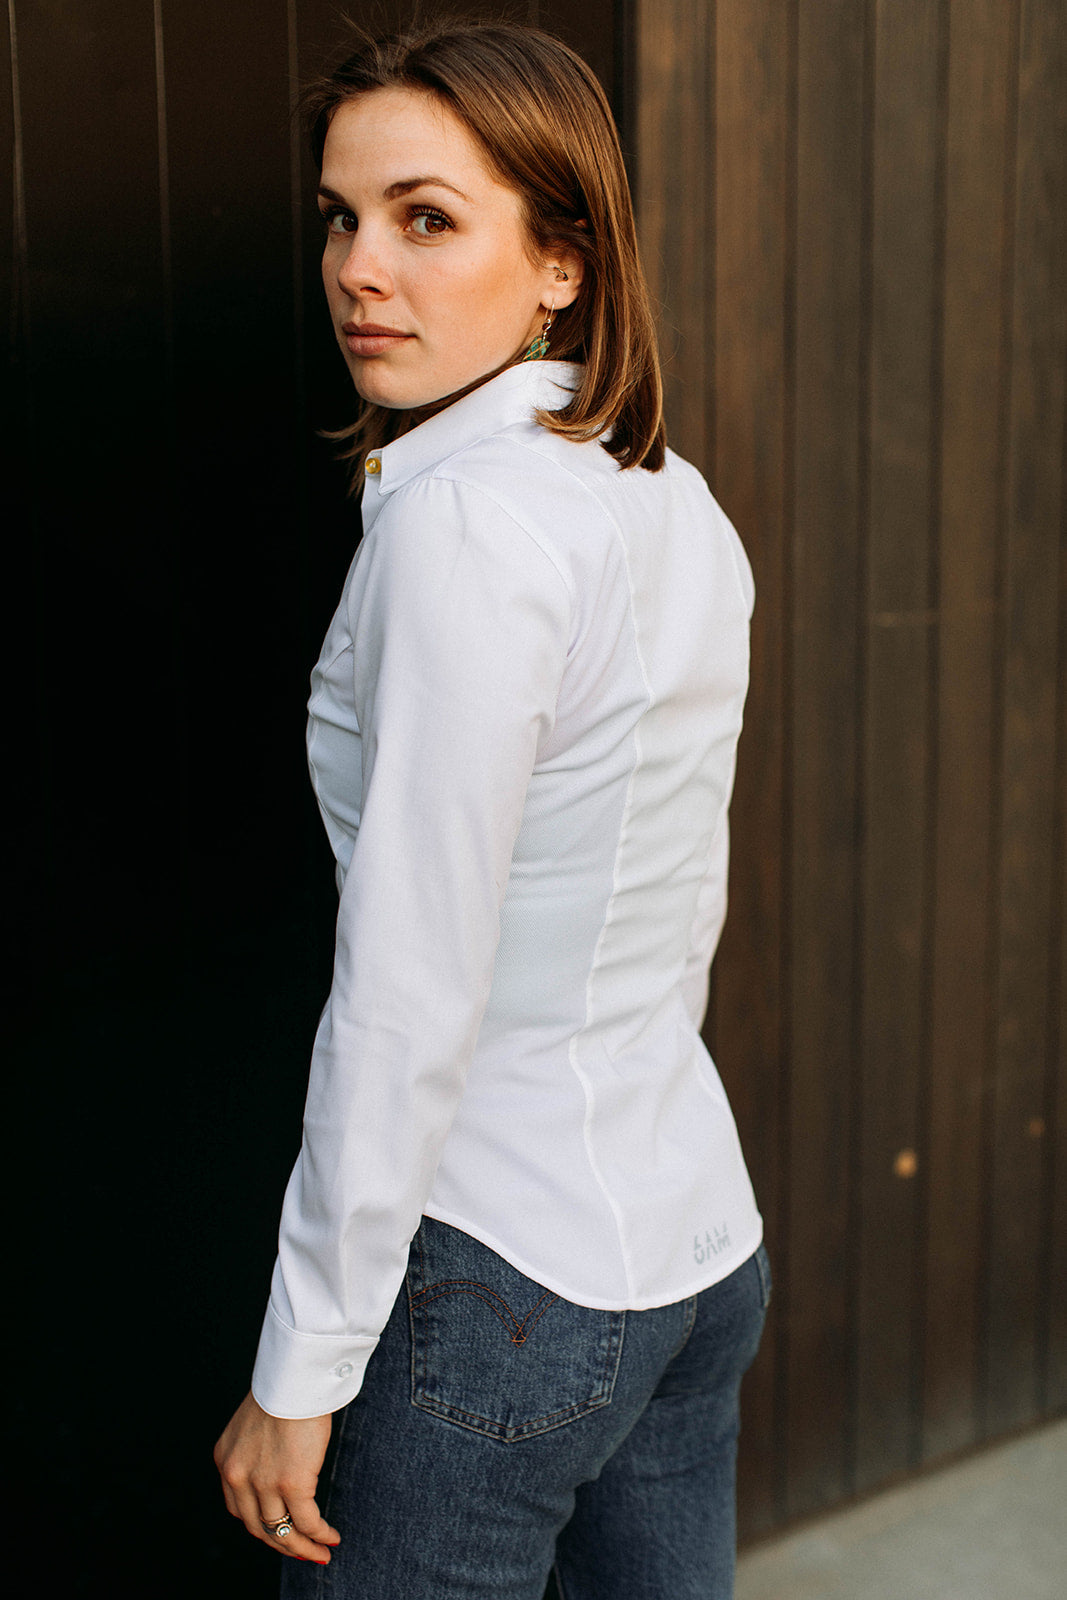 The back of a model wearing a white sweatproof dress shirt for women